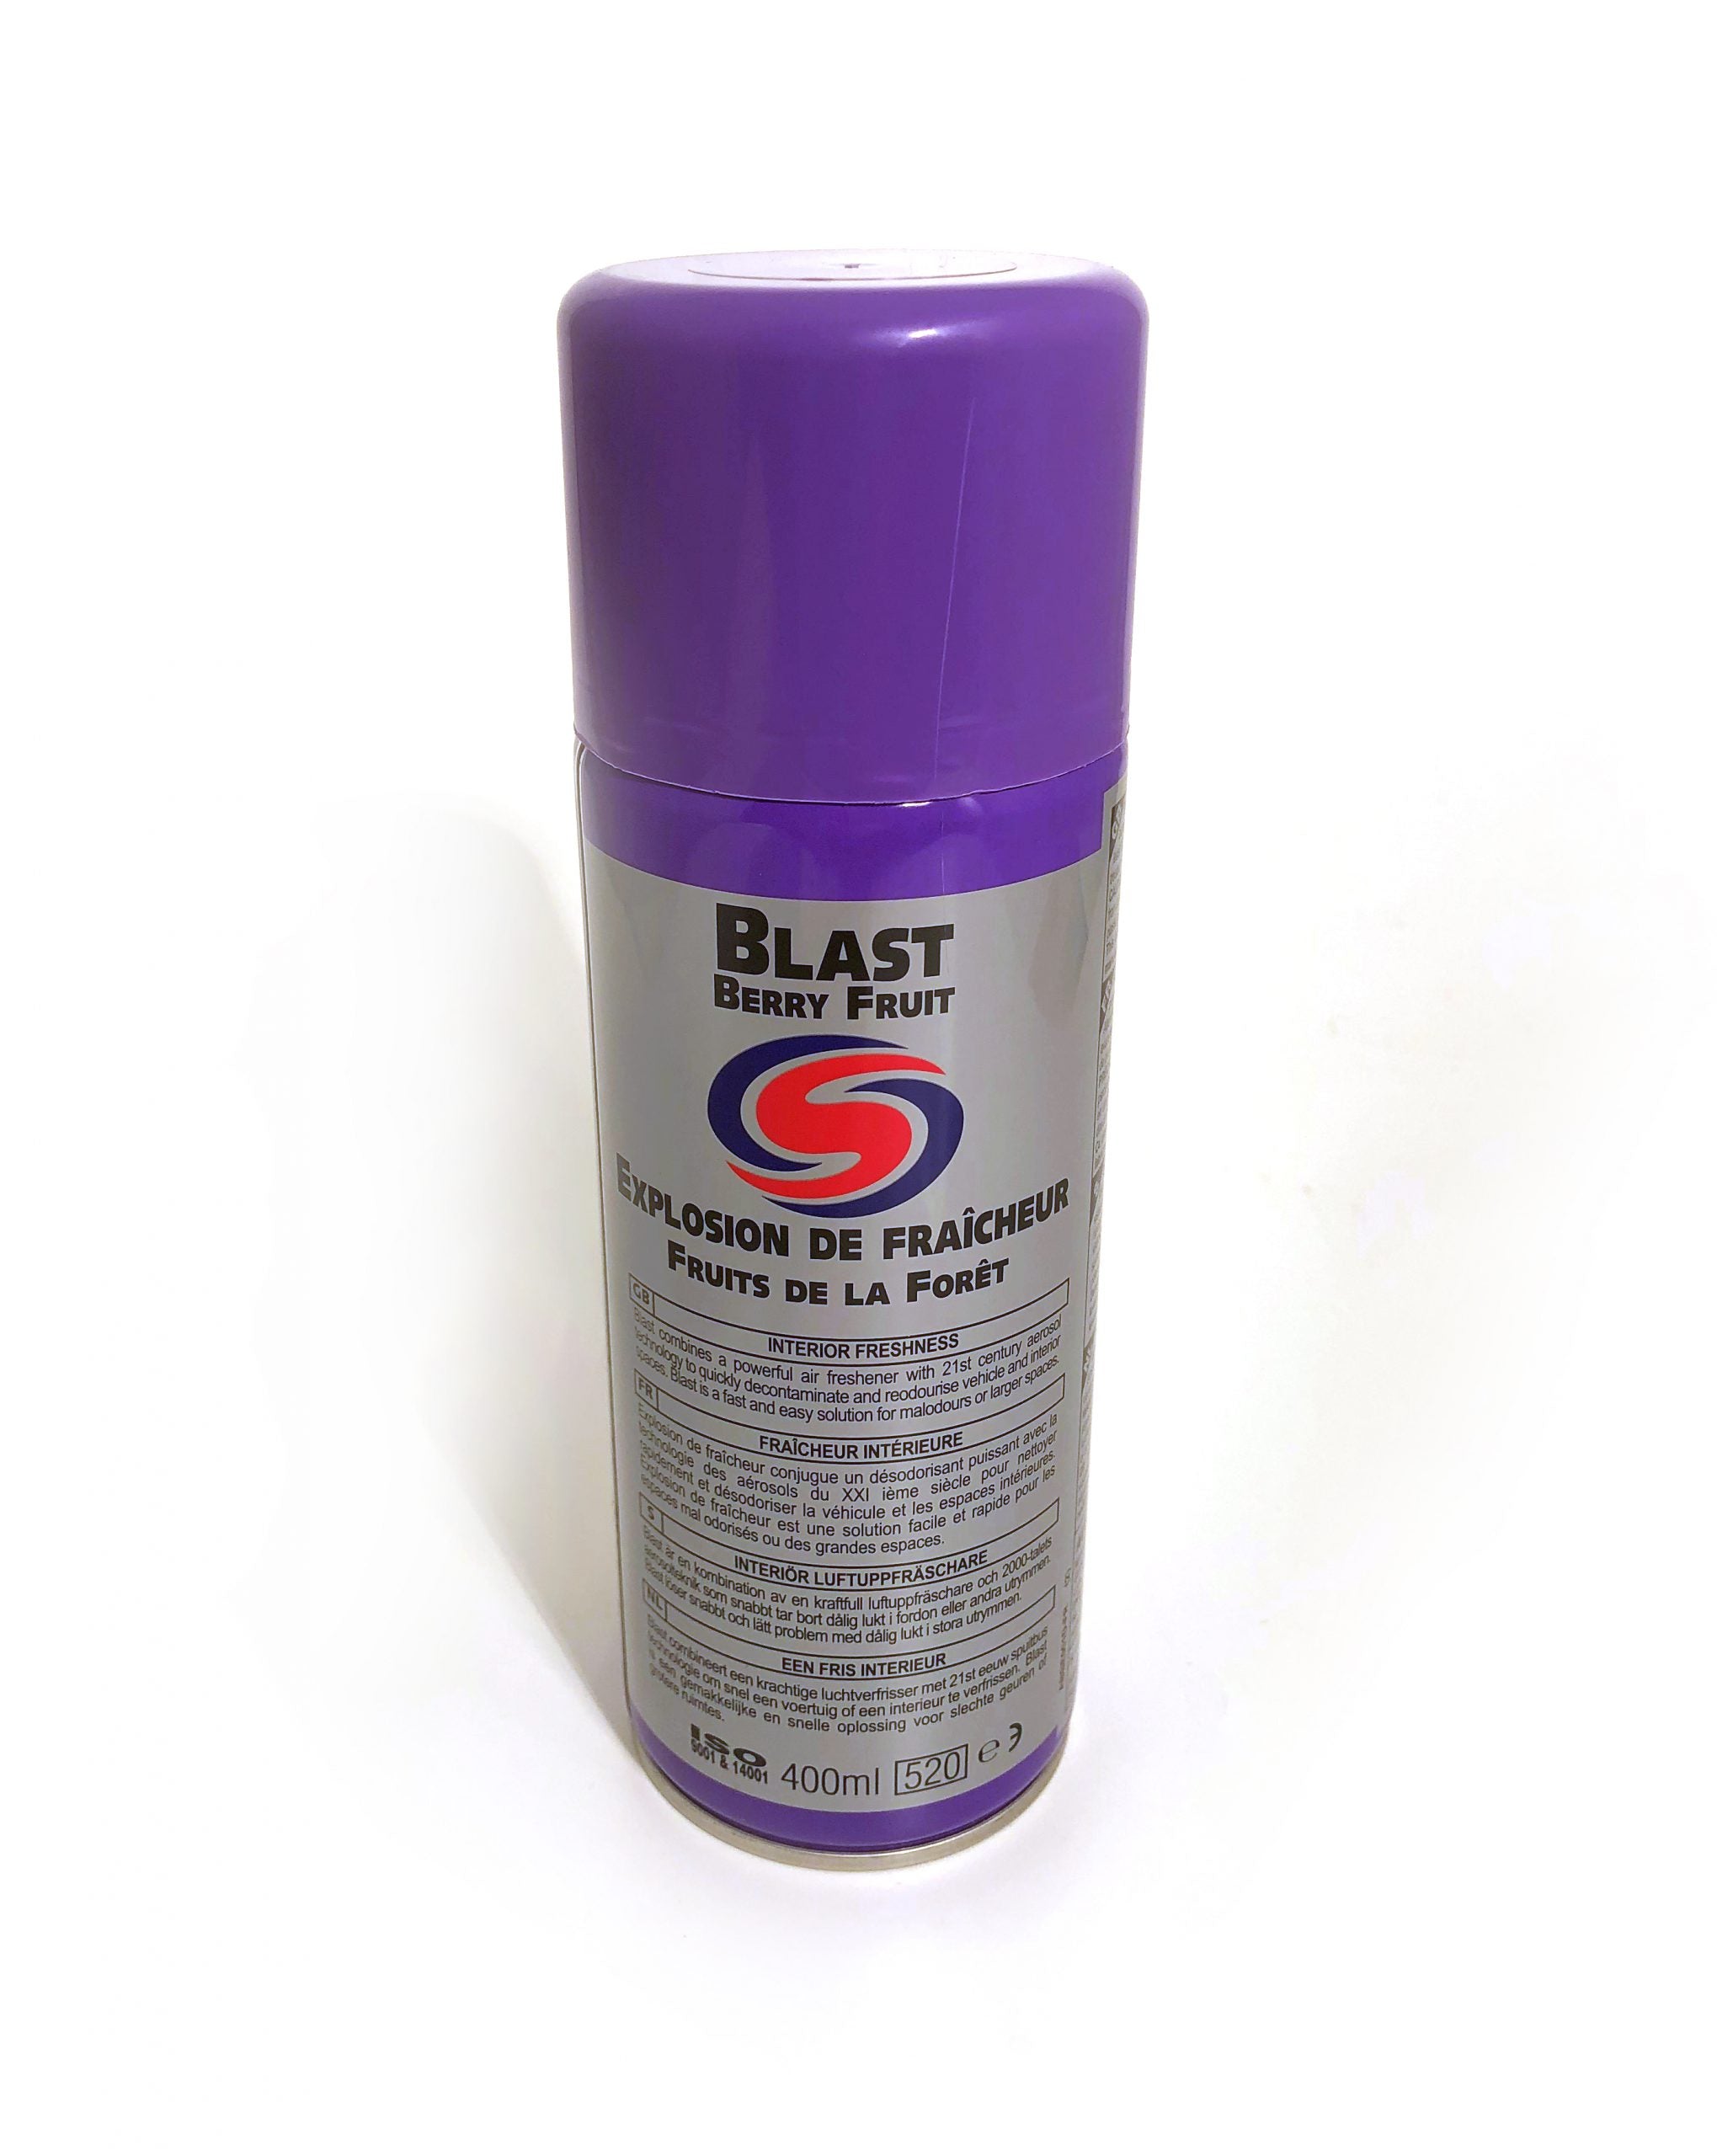 Silicone Spray - 3 Fragrances - Autosmart